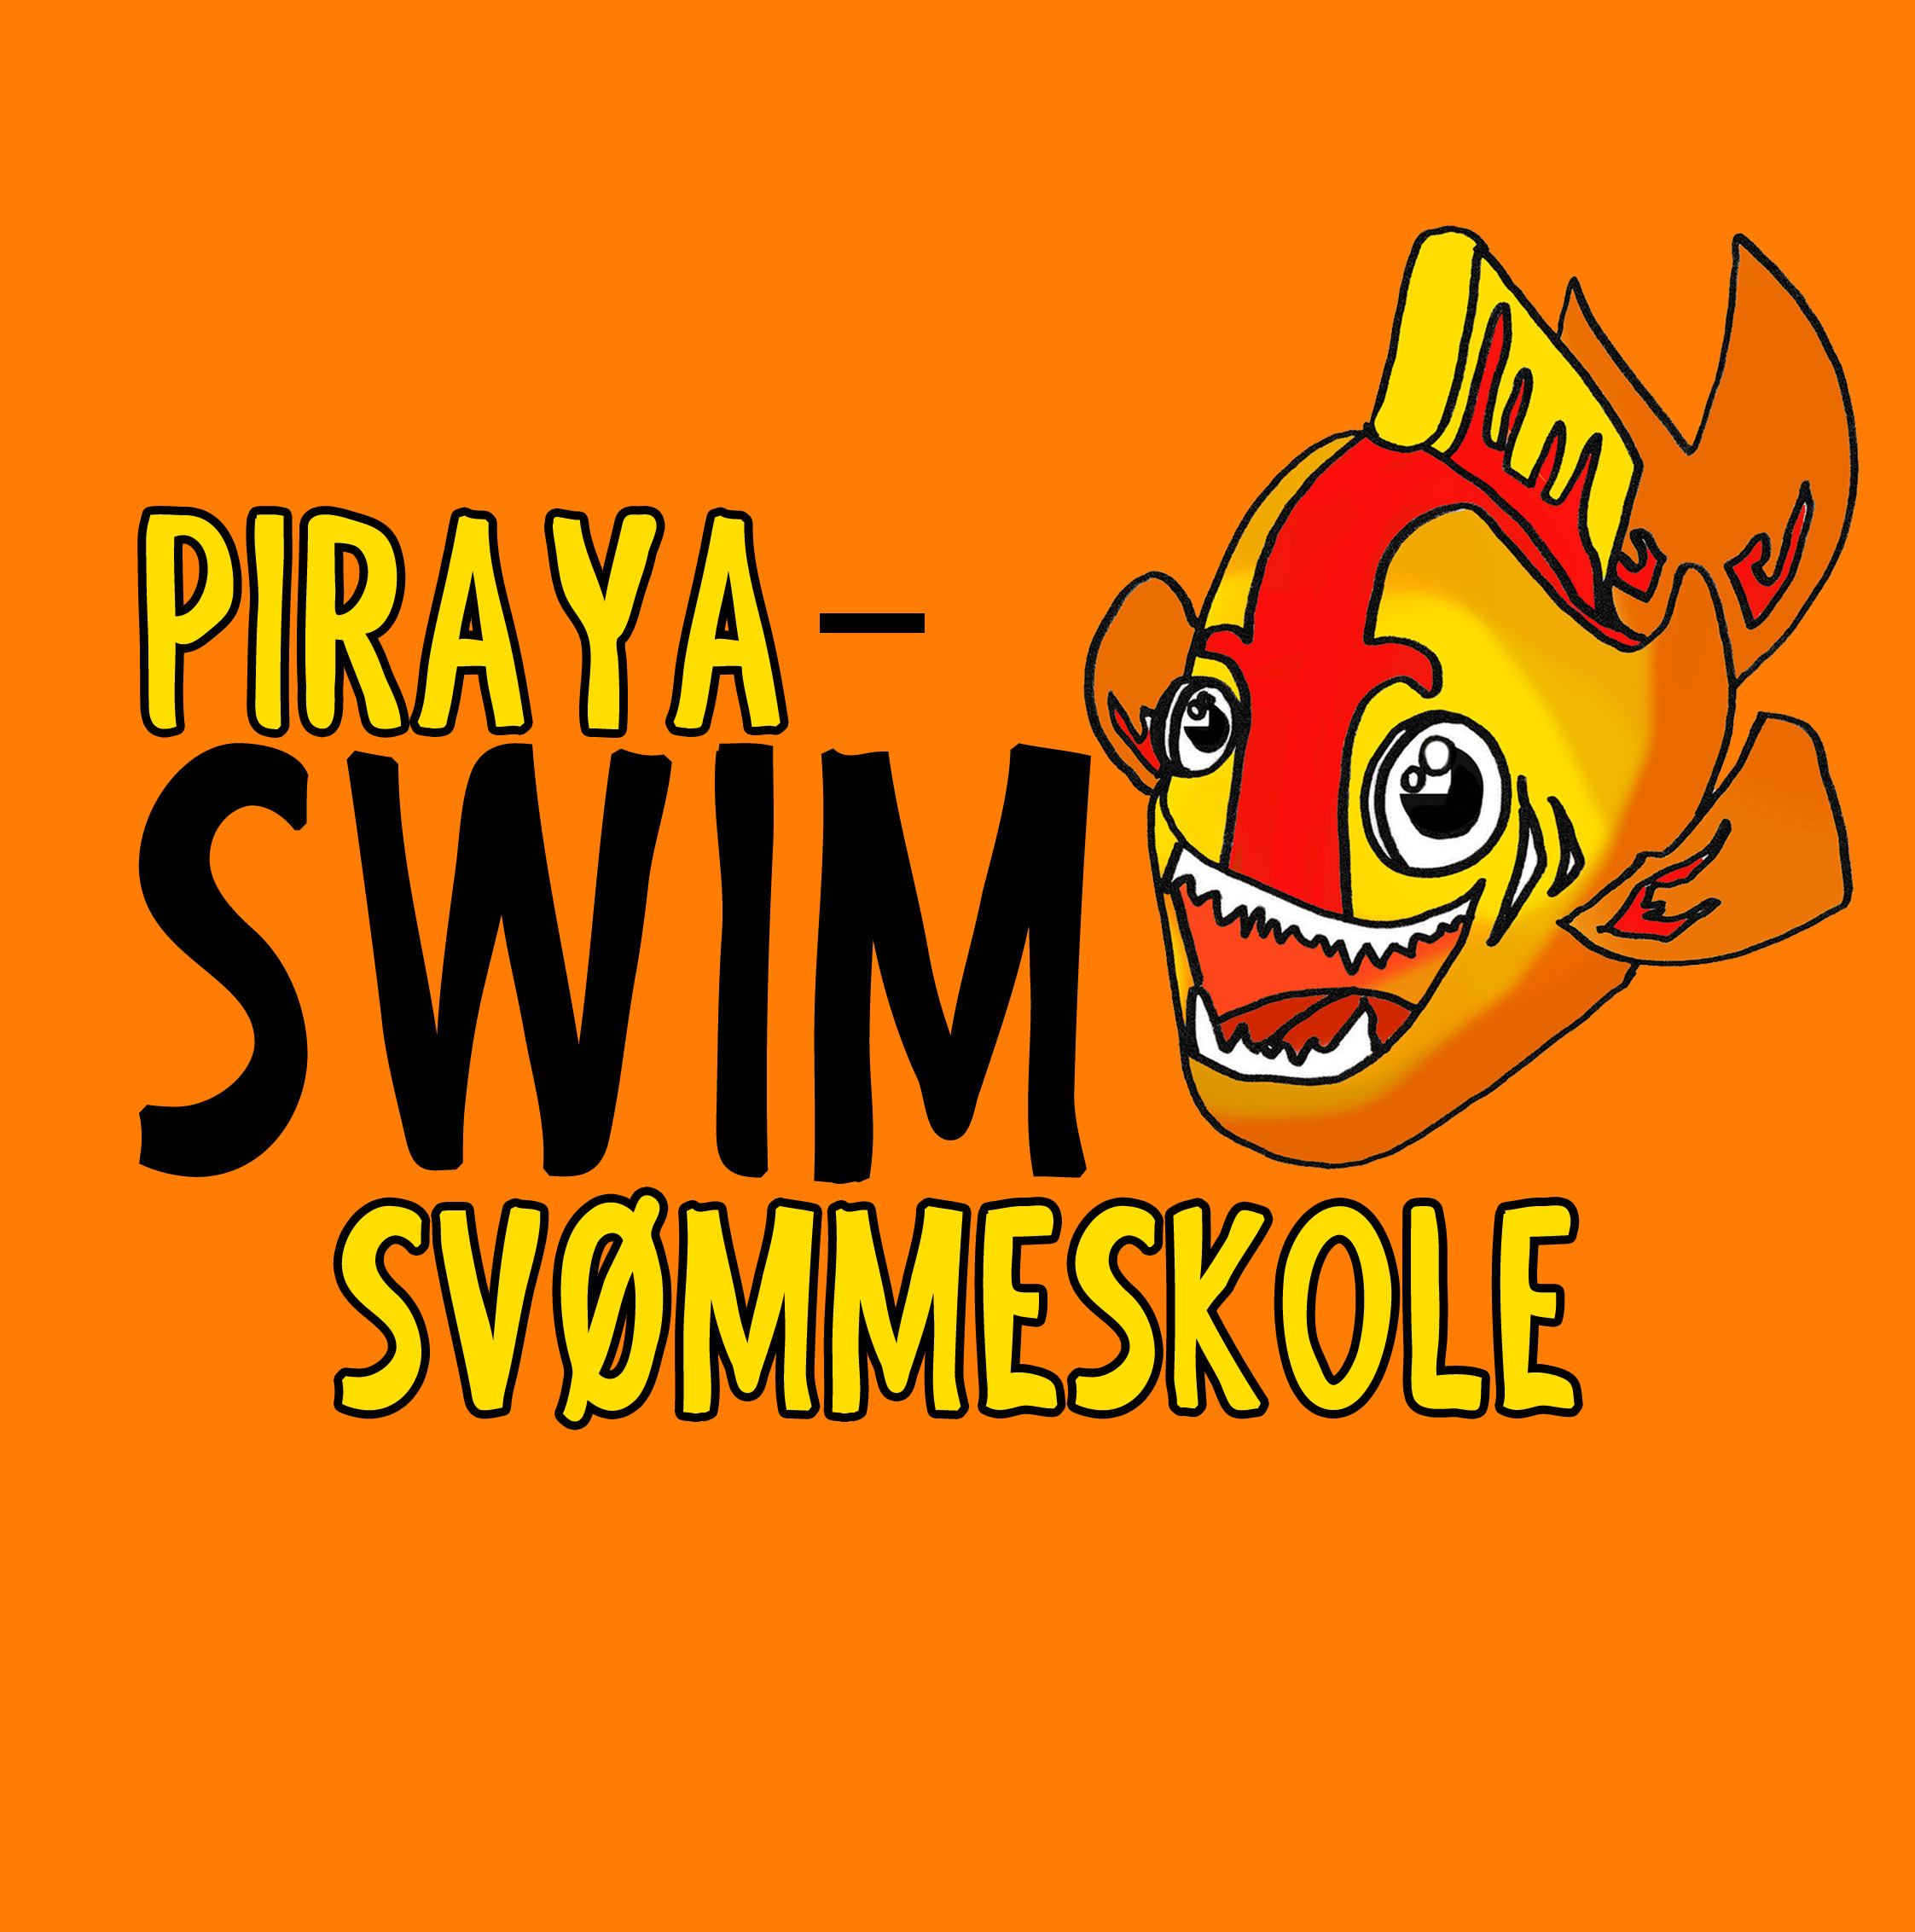 Pirayaswim svømmeskole